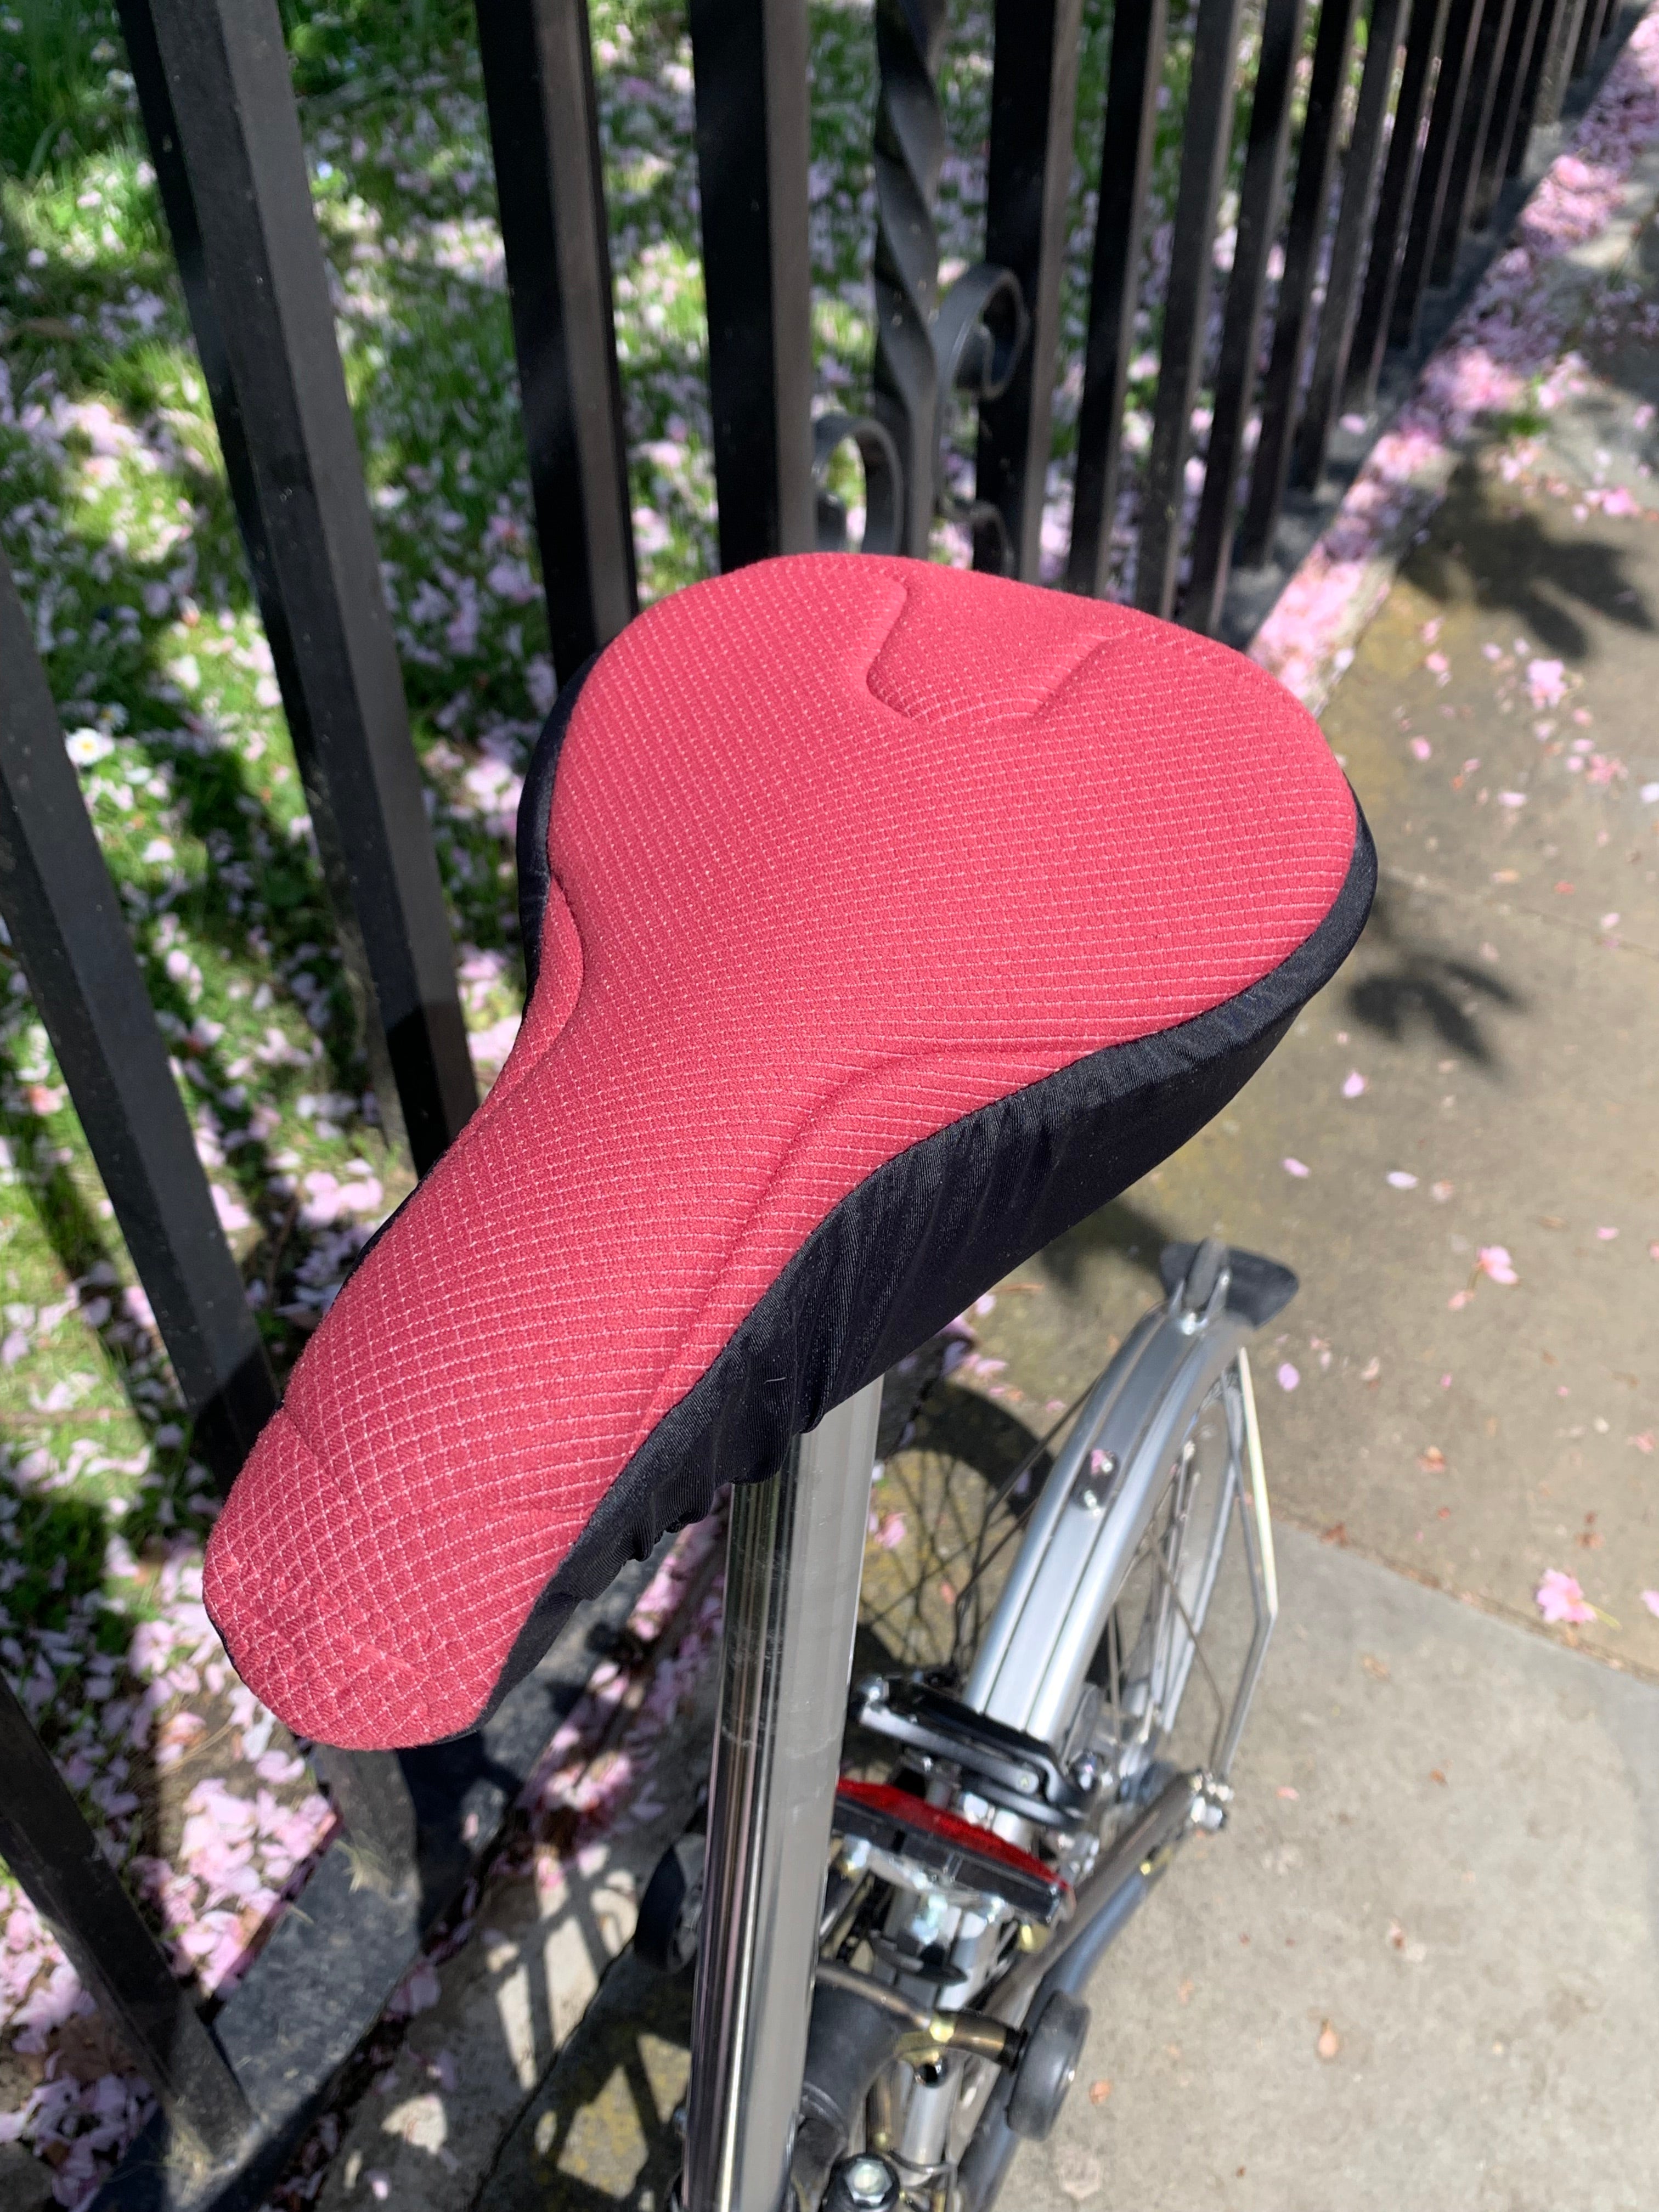 Padded Bike Seat Cover for Endurance Training - Ruby Red & Black (Women)